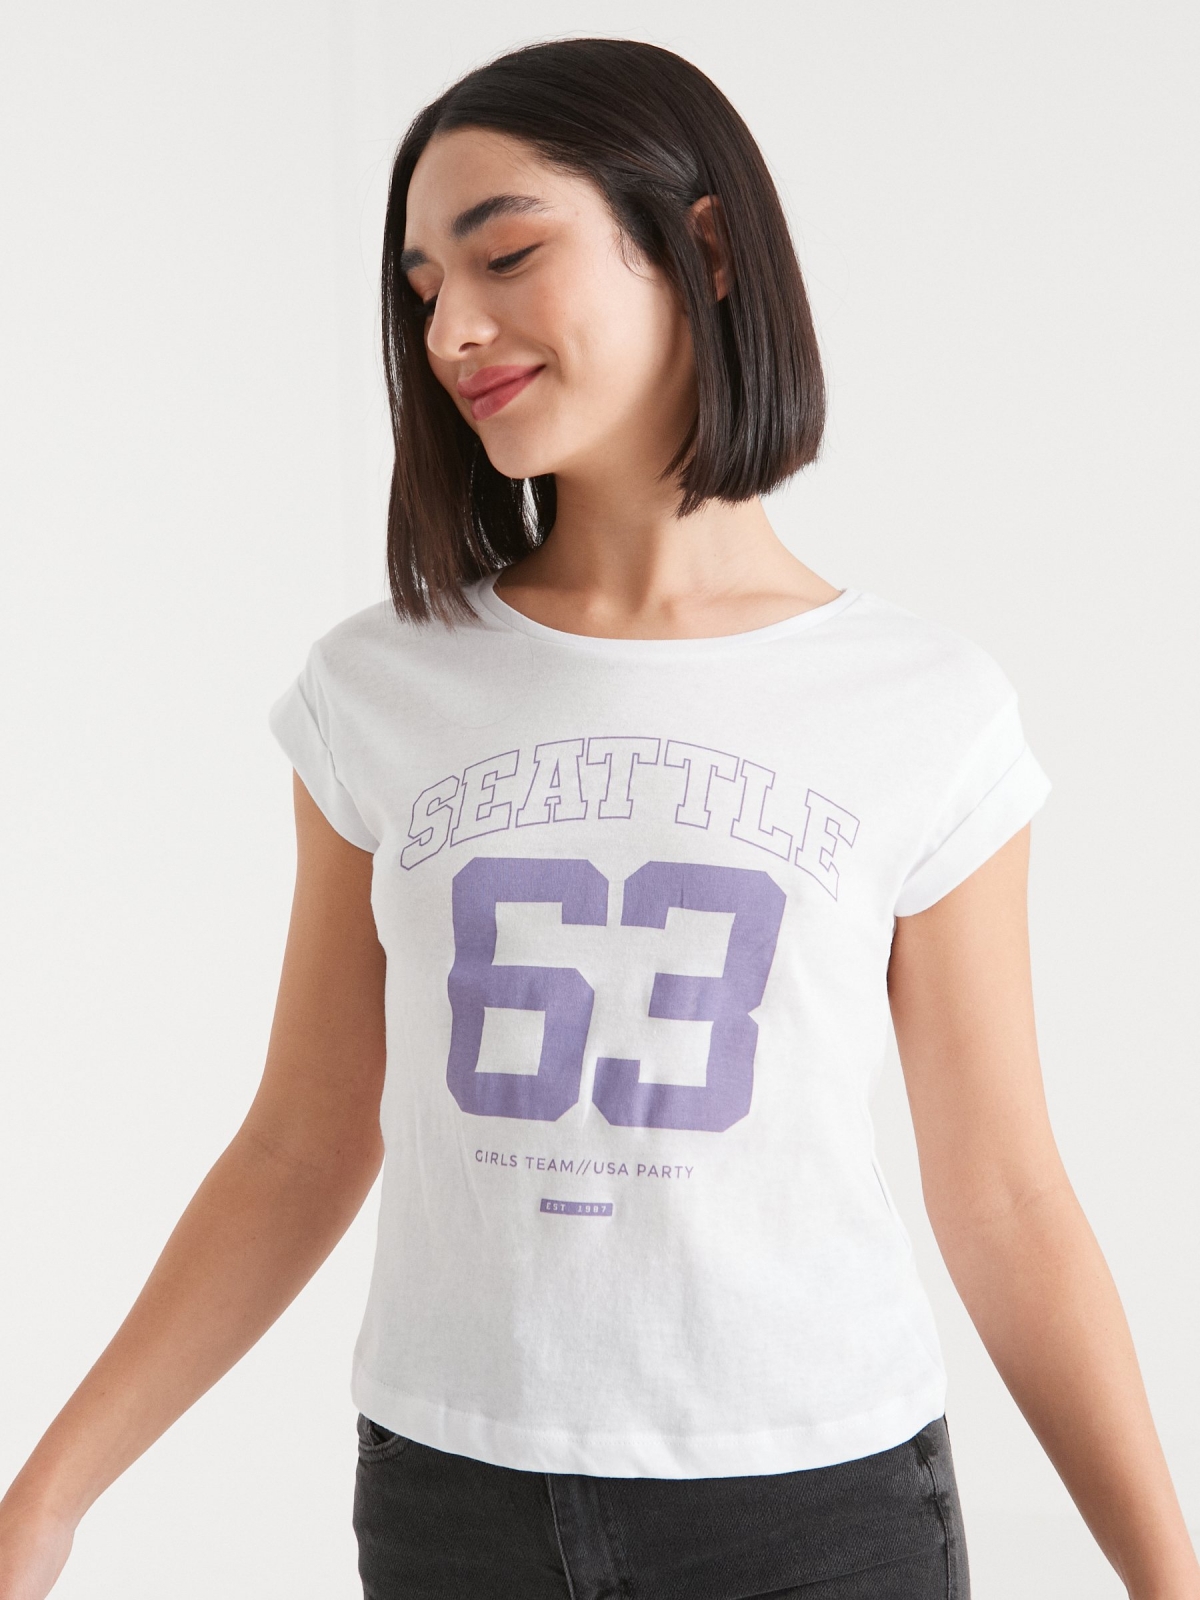 Women's Seattle Oversized Printed T-shirt